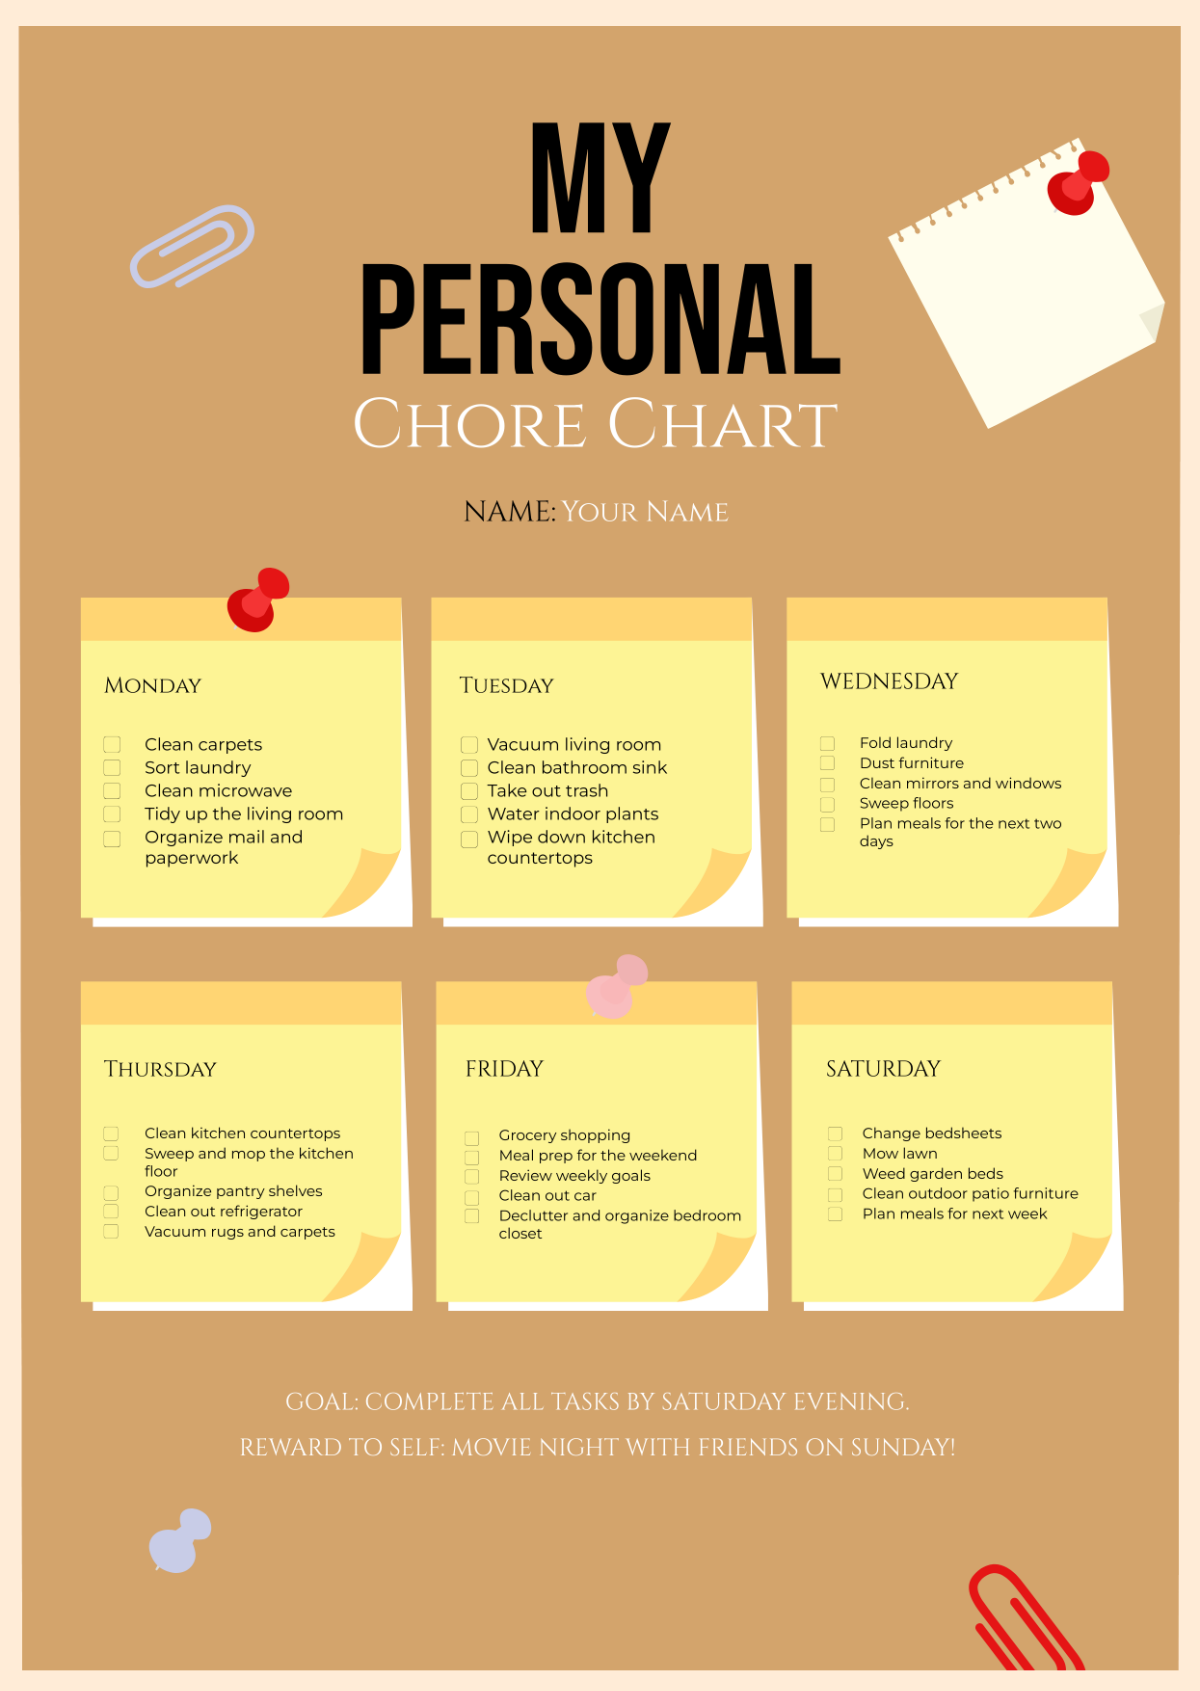 My Personal Chore Chart